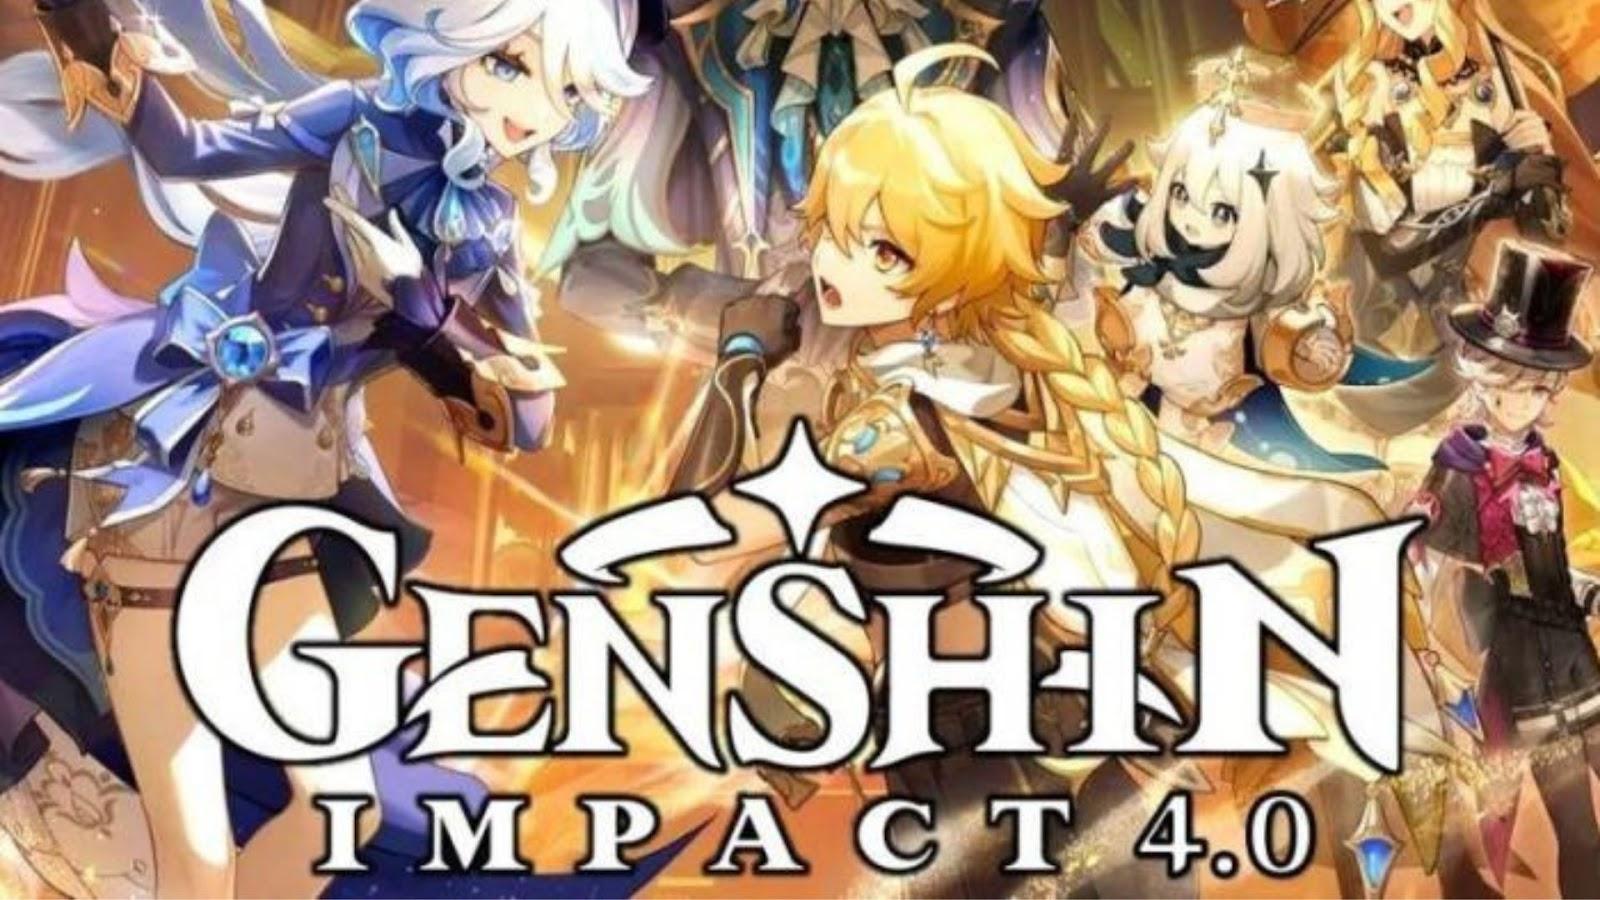 Genshin Impact 4.0 events: Mega Meka Melee, Relic Records, and